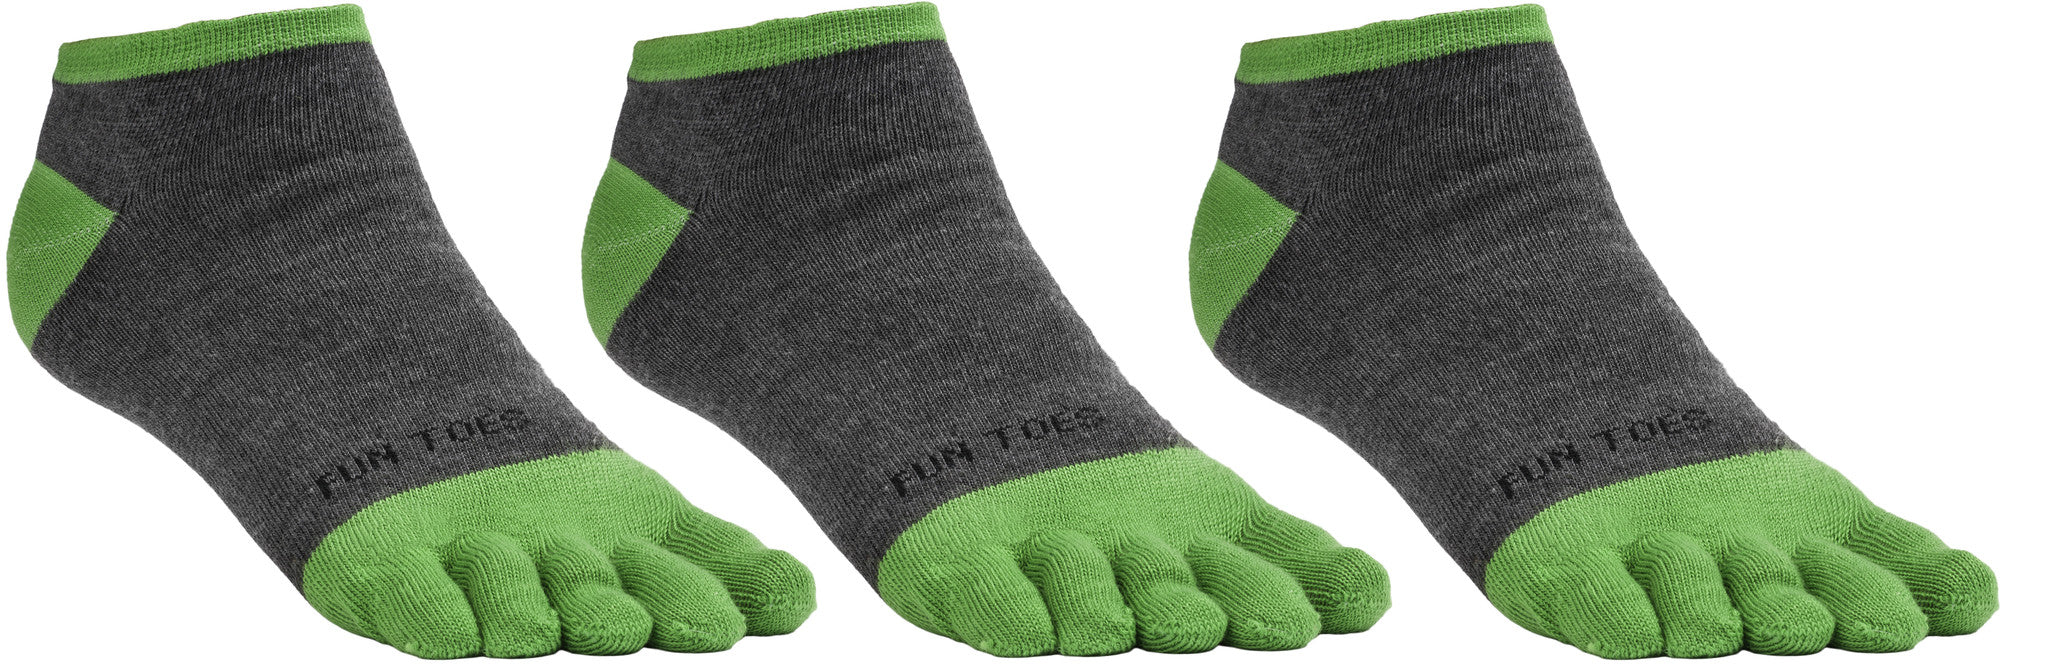 FUN TOES Men's Toe Socks Barefoot Running Socks Size 10-13 Shoe Size 6 - 12.5  Pack of 3 Pairs Grey/Green